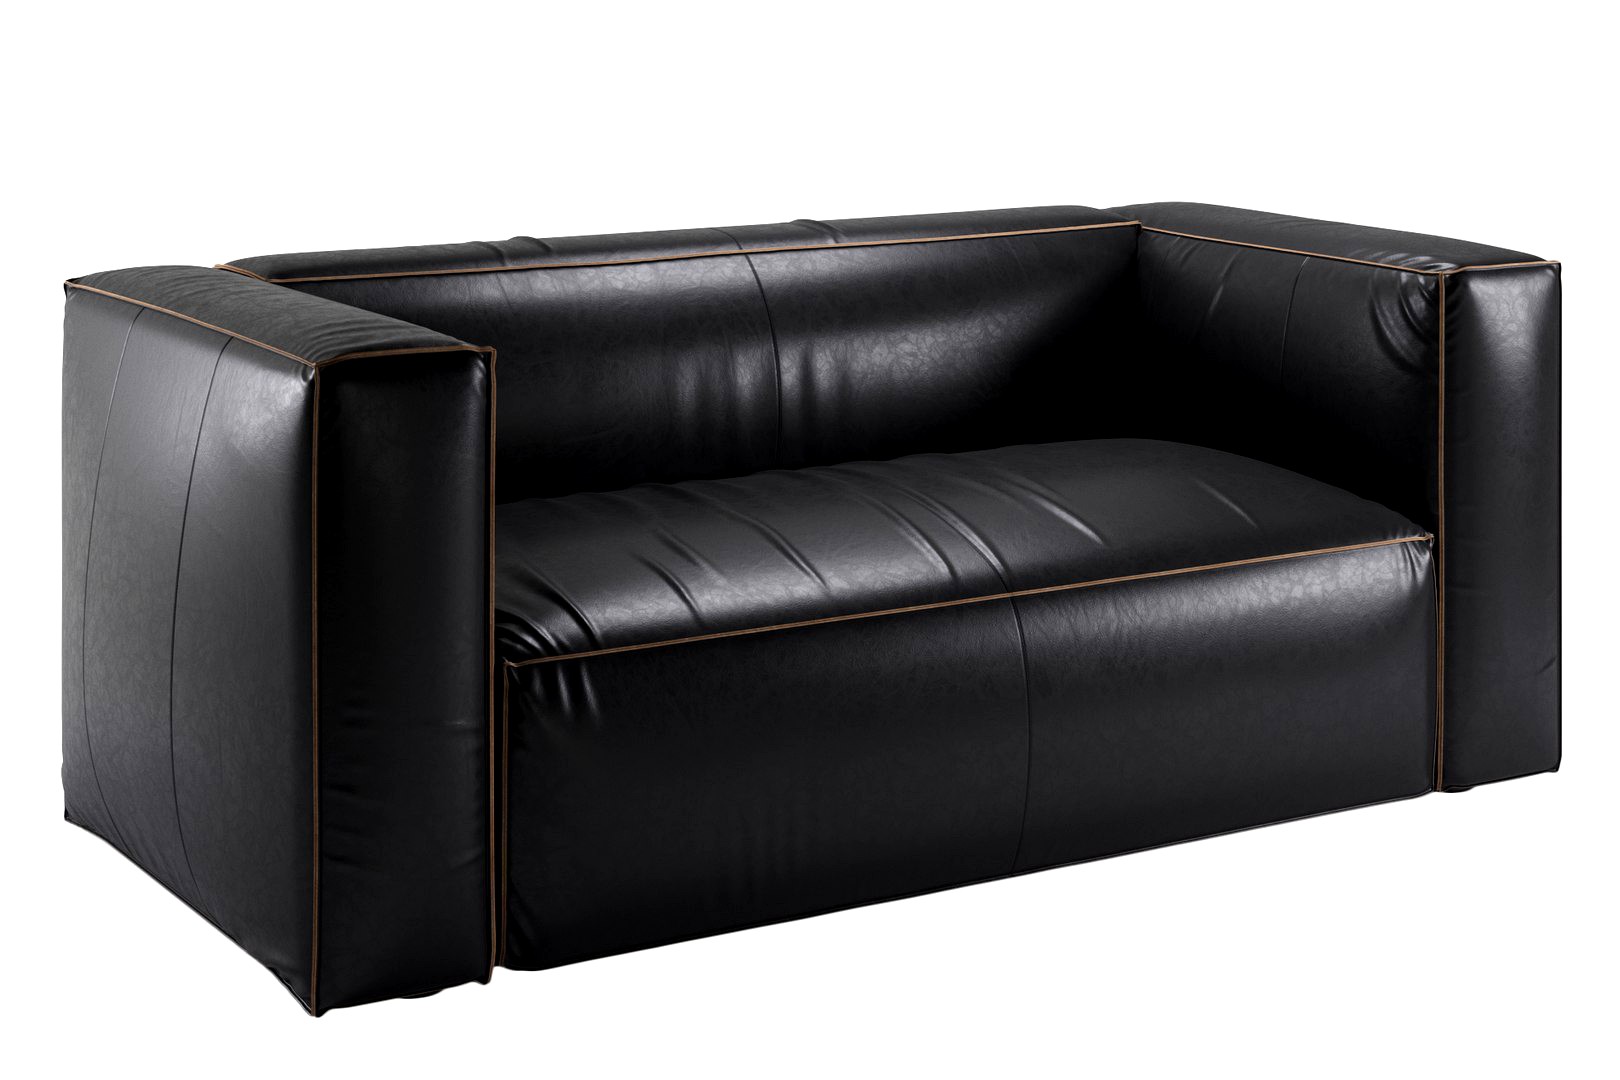 Photorealistic double leather sofa Nolita